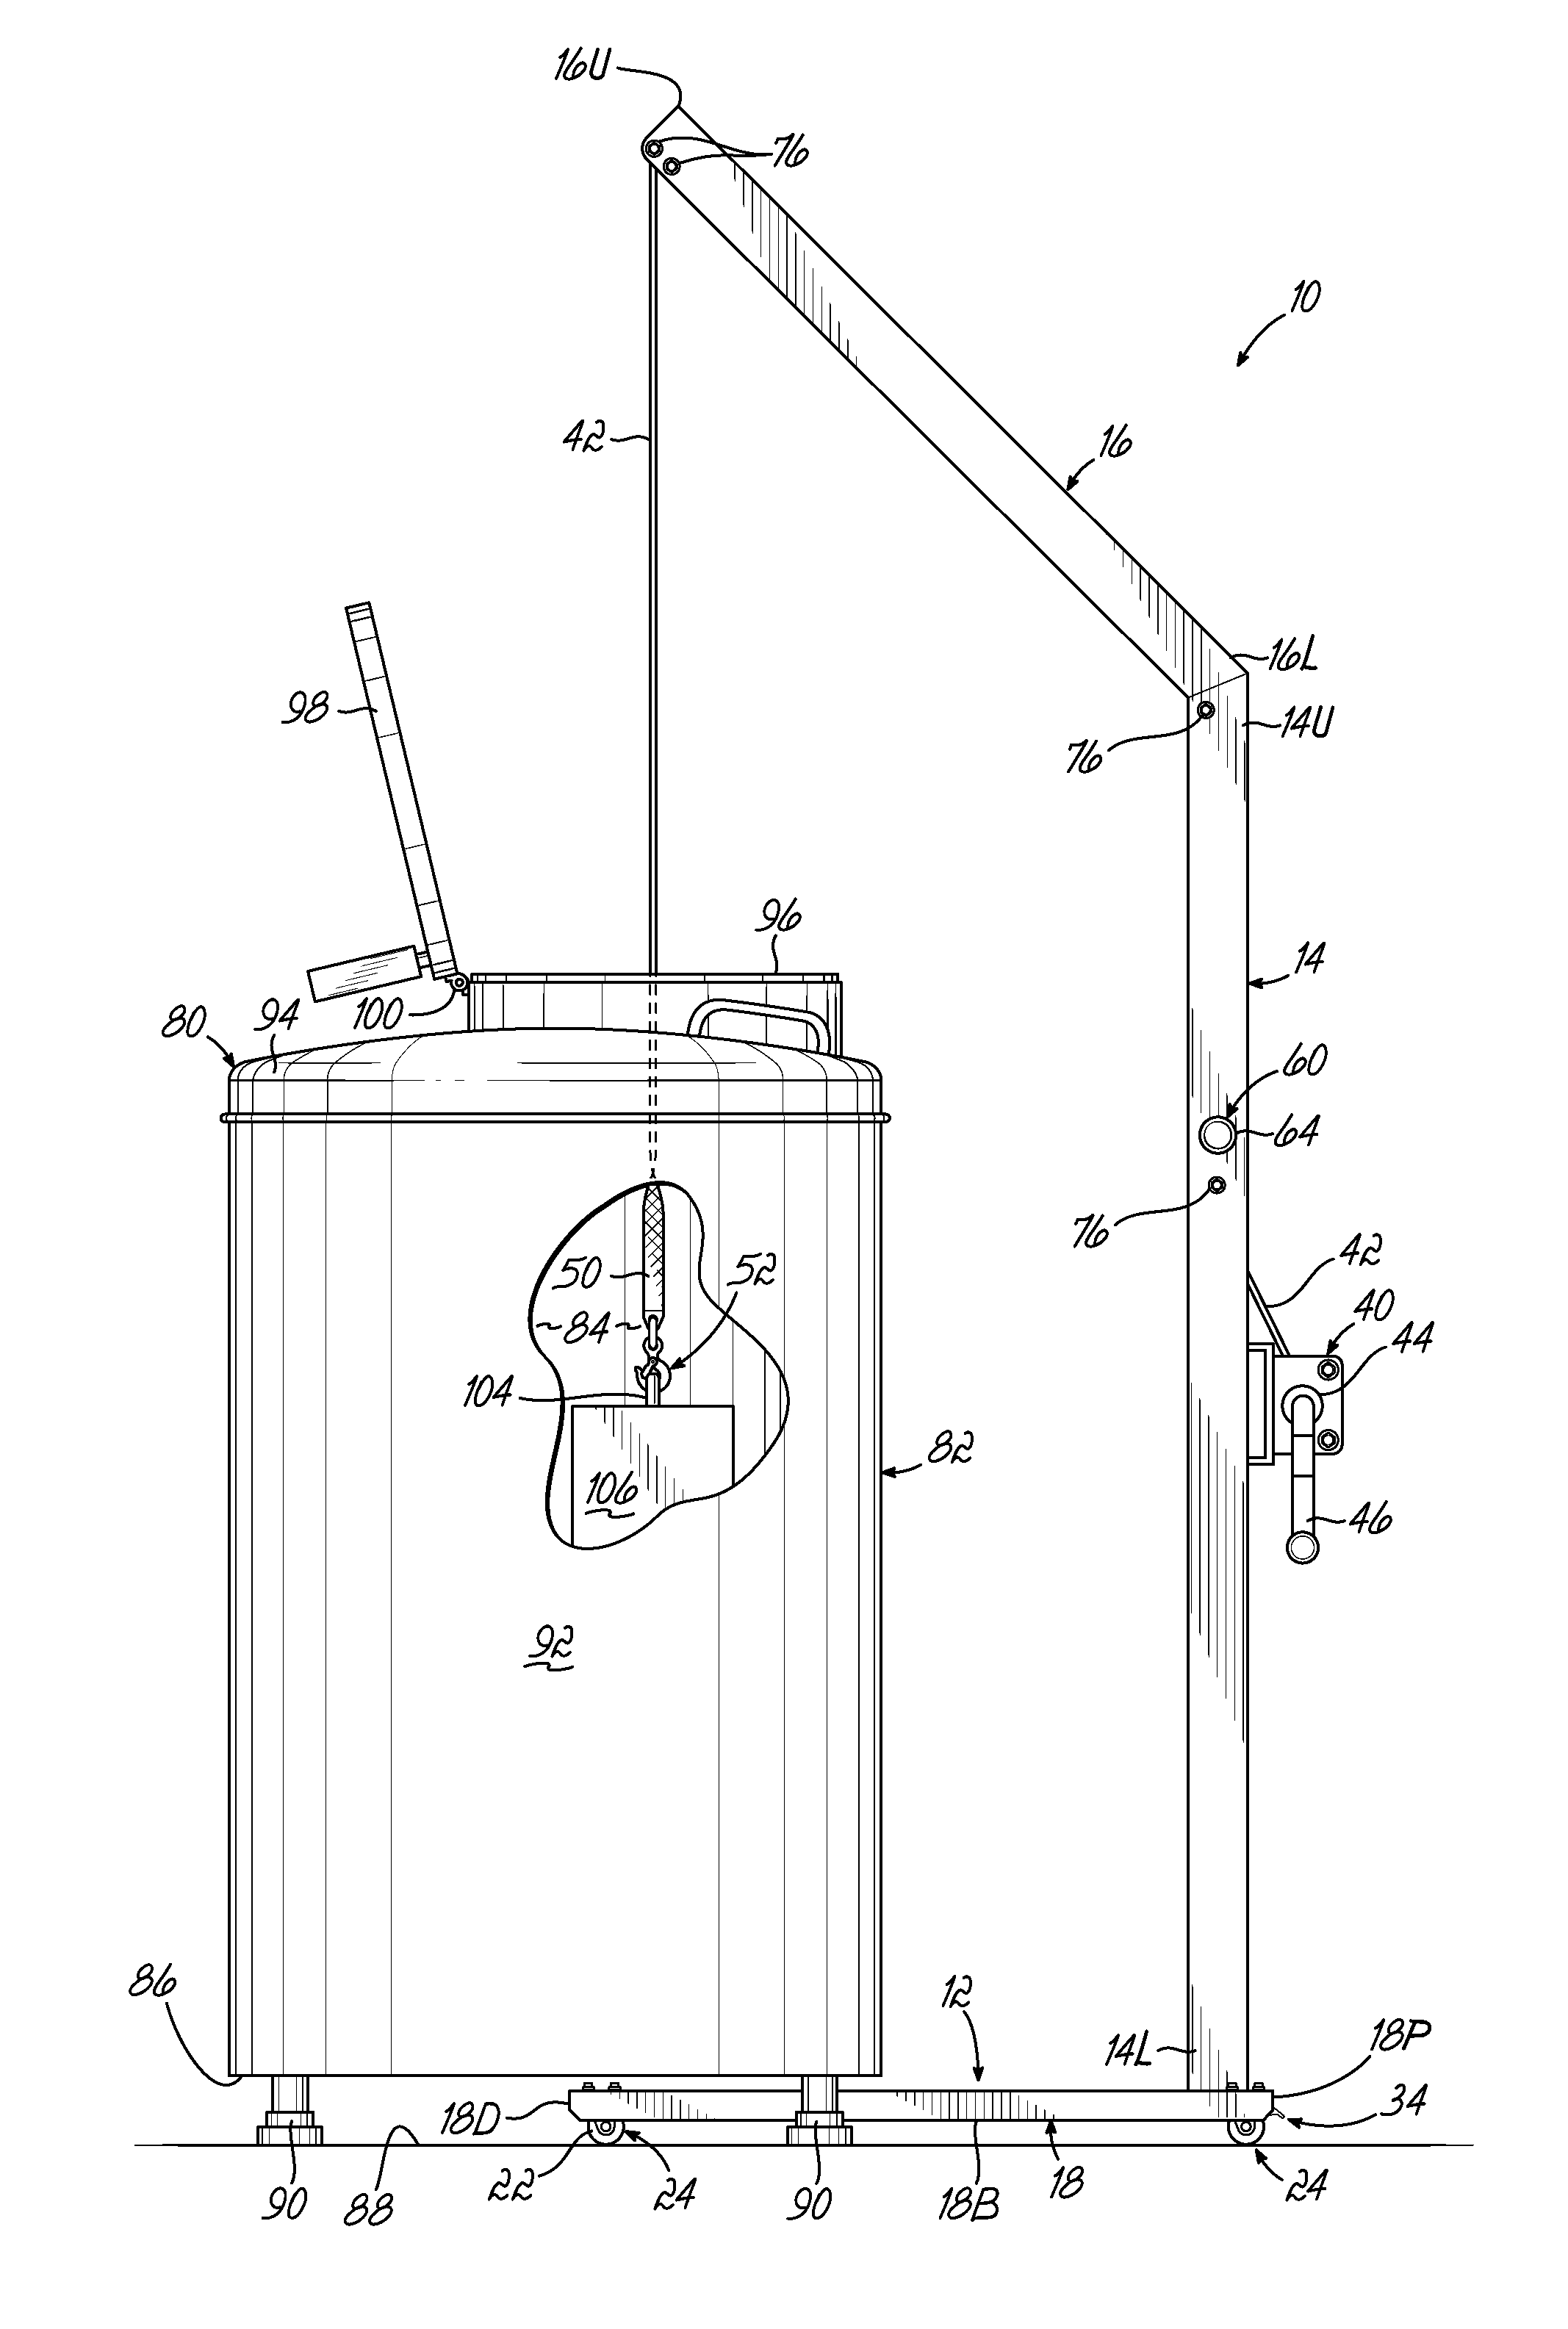 Method for retrieving storage racks from a tank freezer using a retrieval crane, and related combinations